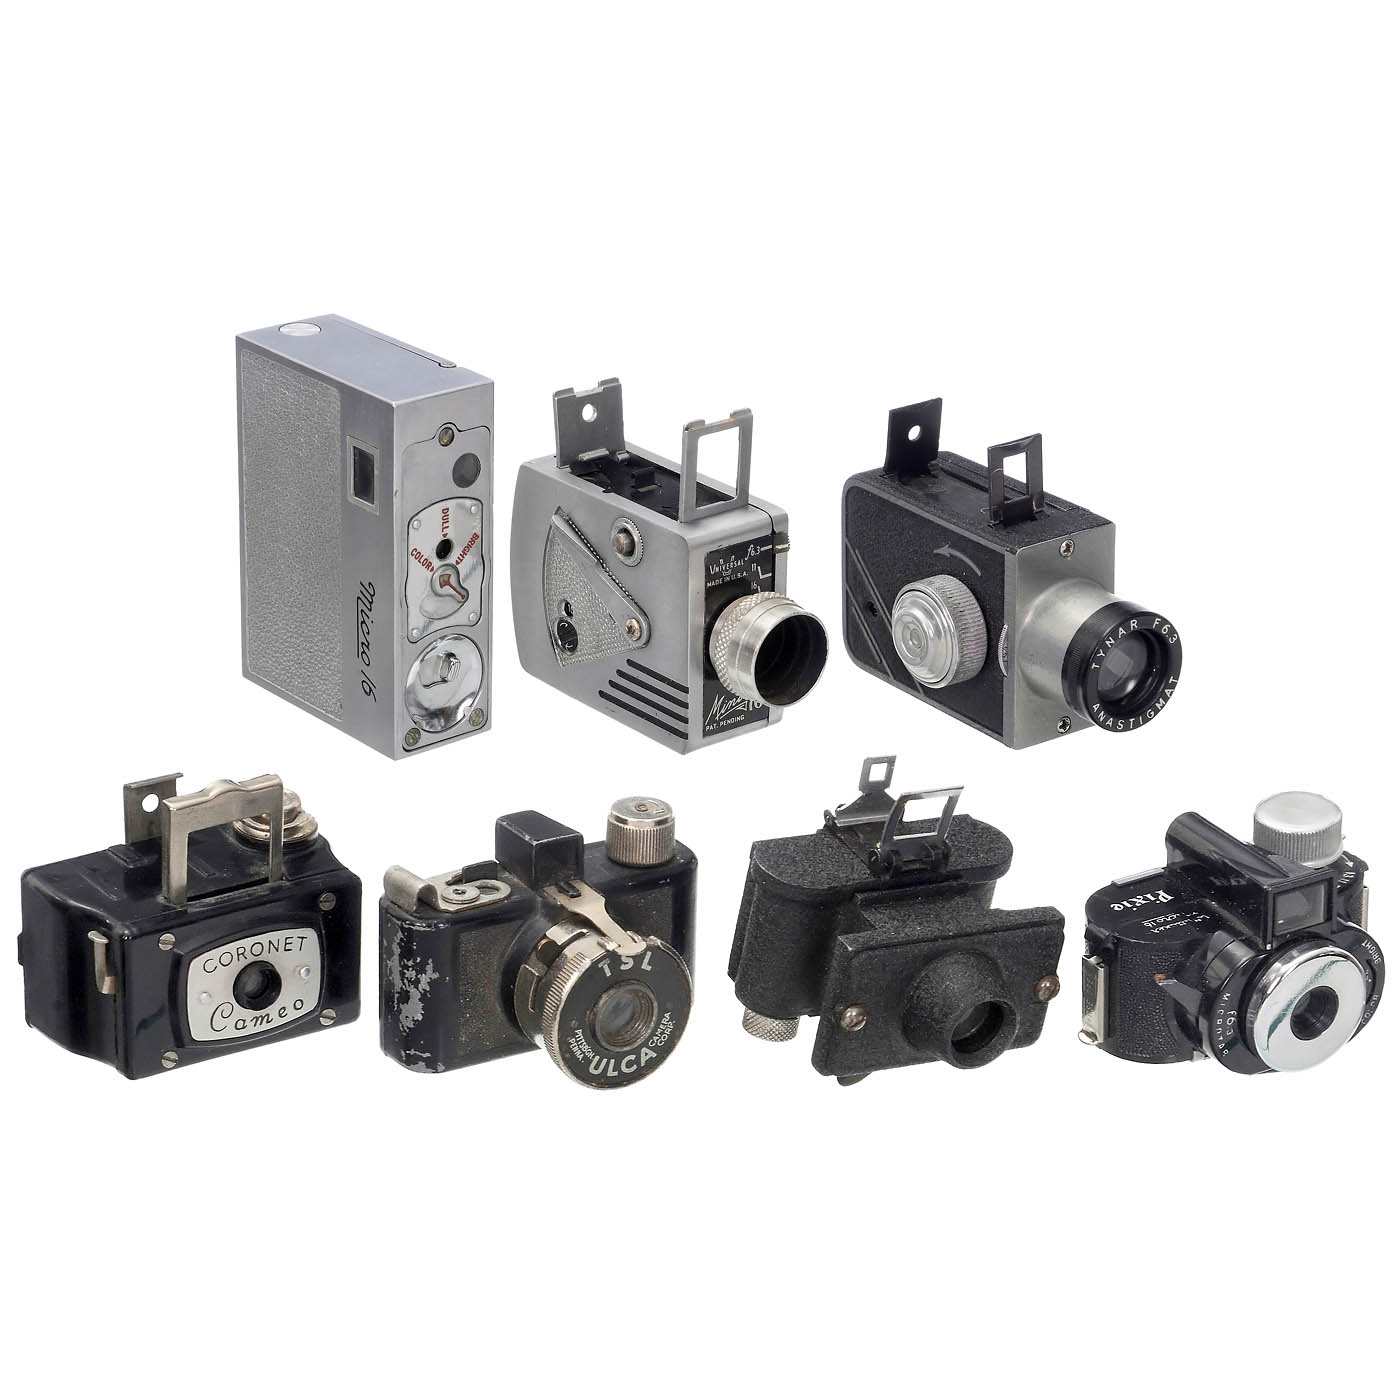 7 Unusual Miniature Cameras